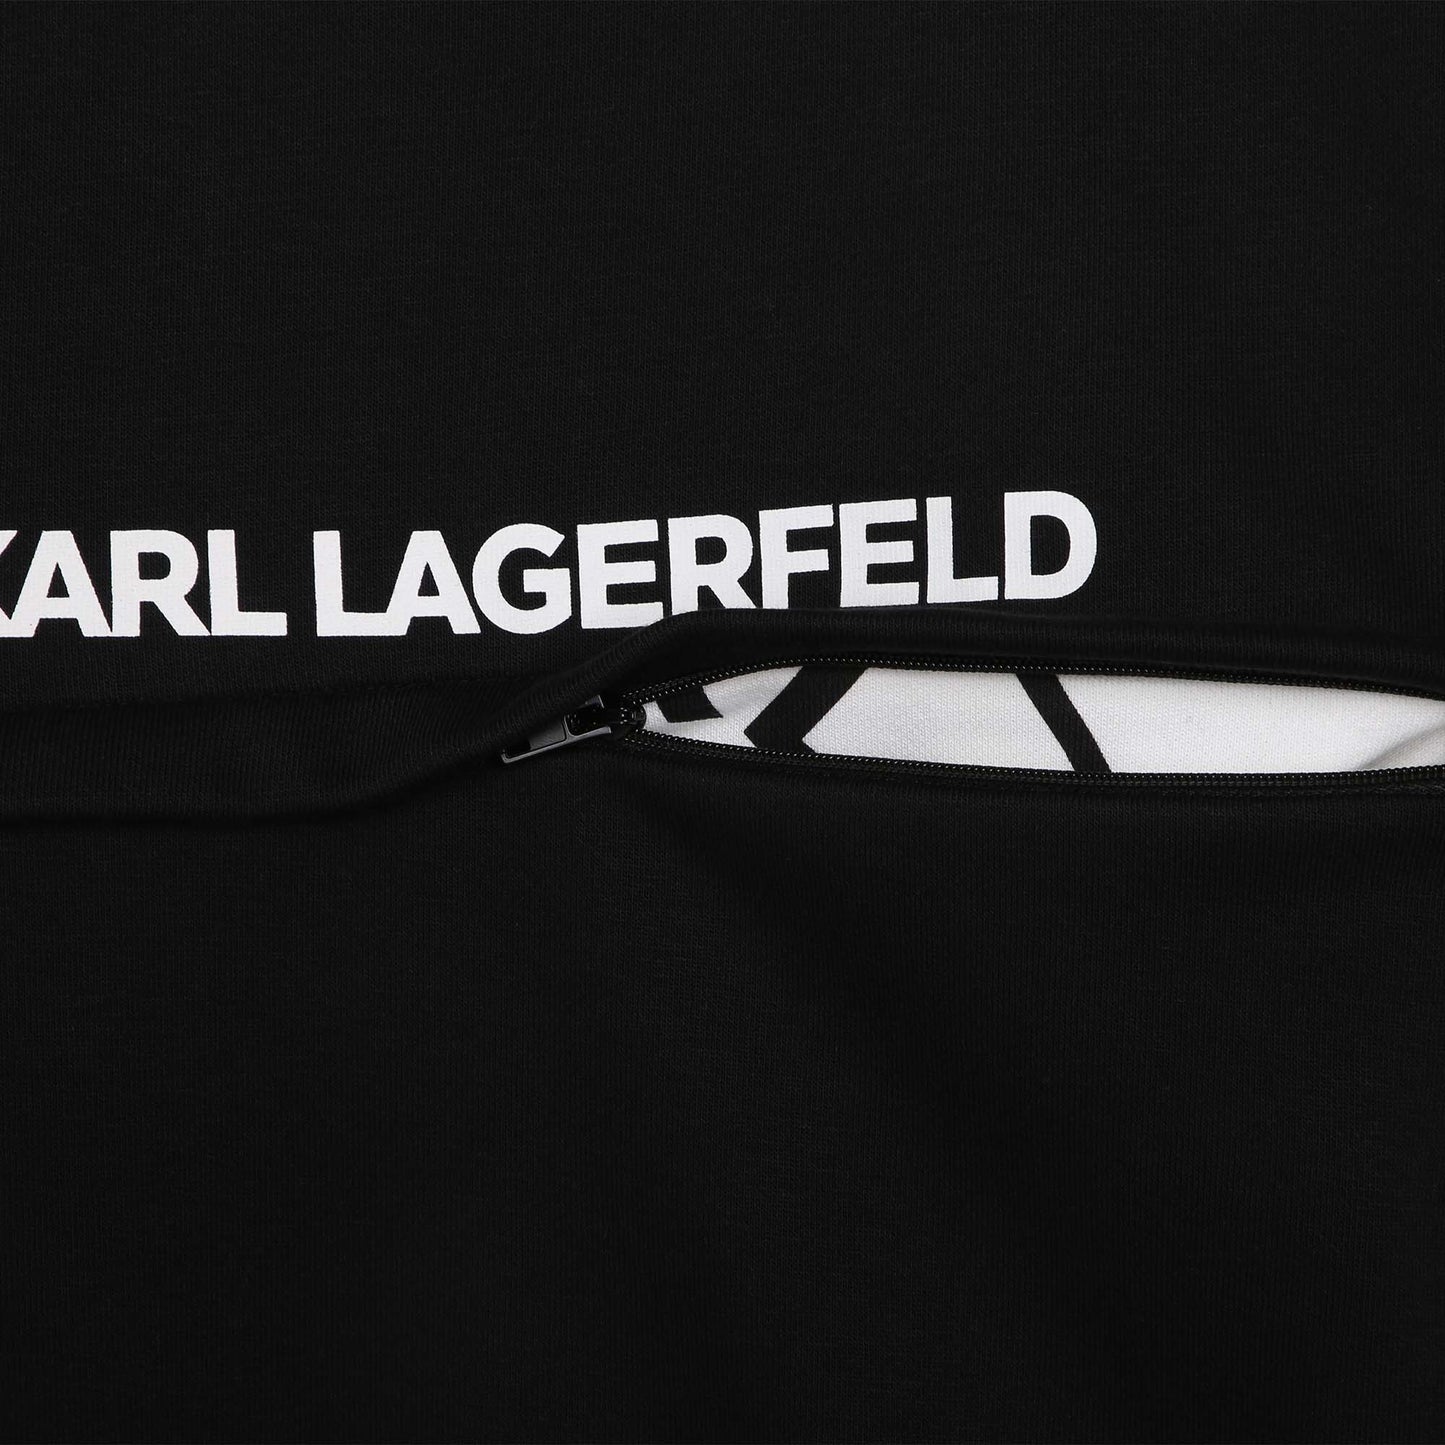 Karl Lagerfeld Sweater Dress w/ Front Logo Print